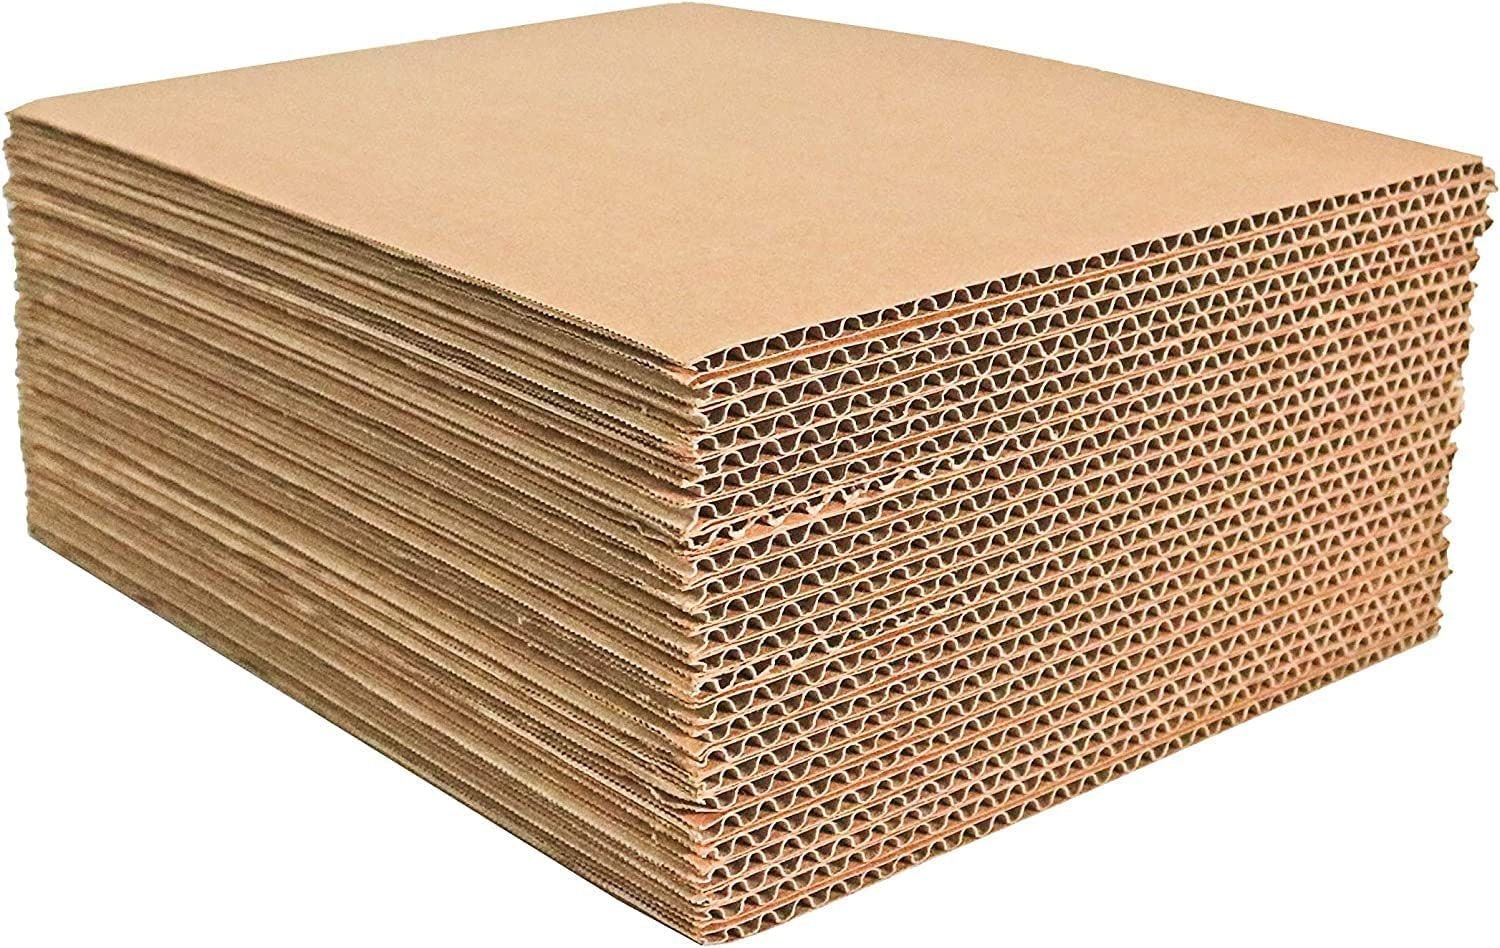 50 Sheets Chipboard 11 x 14 inch - 22pt Light Weight Brown Kraft Cardboard